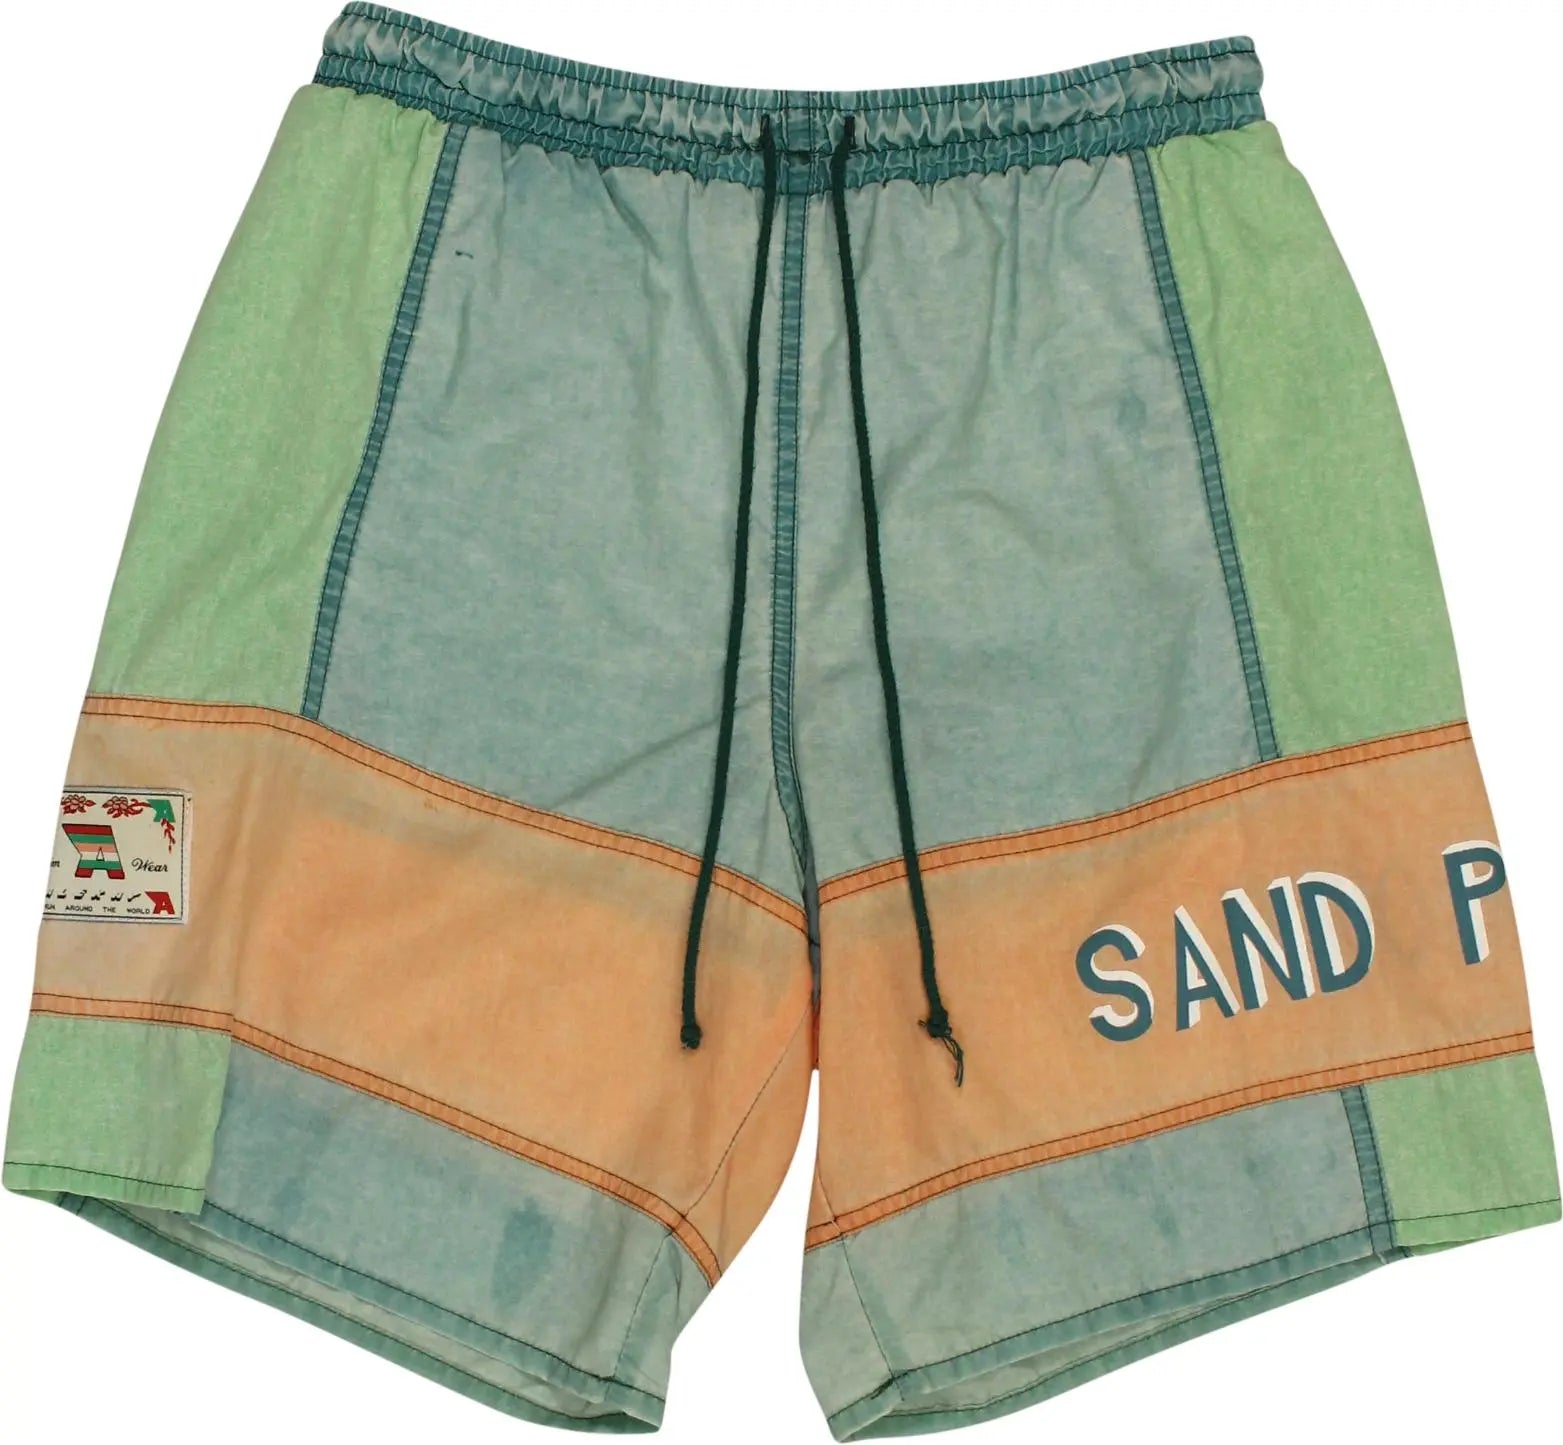 Alekay - Vintage Swim Shorts- ThriftTale.com - Vintage and second handclothing